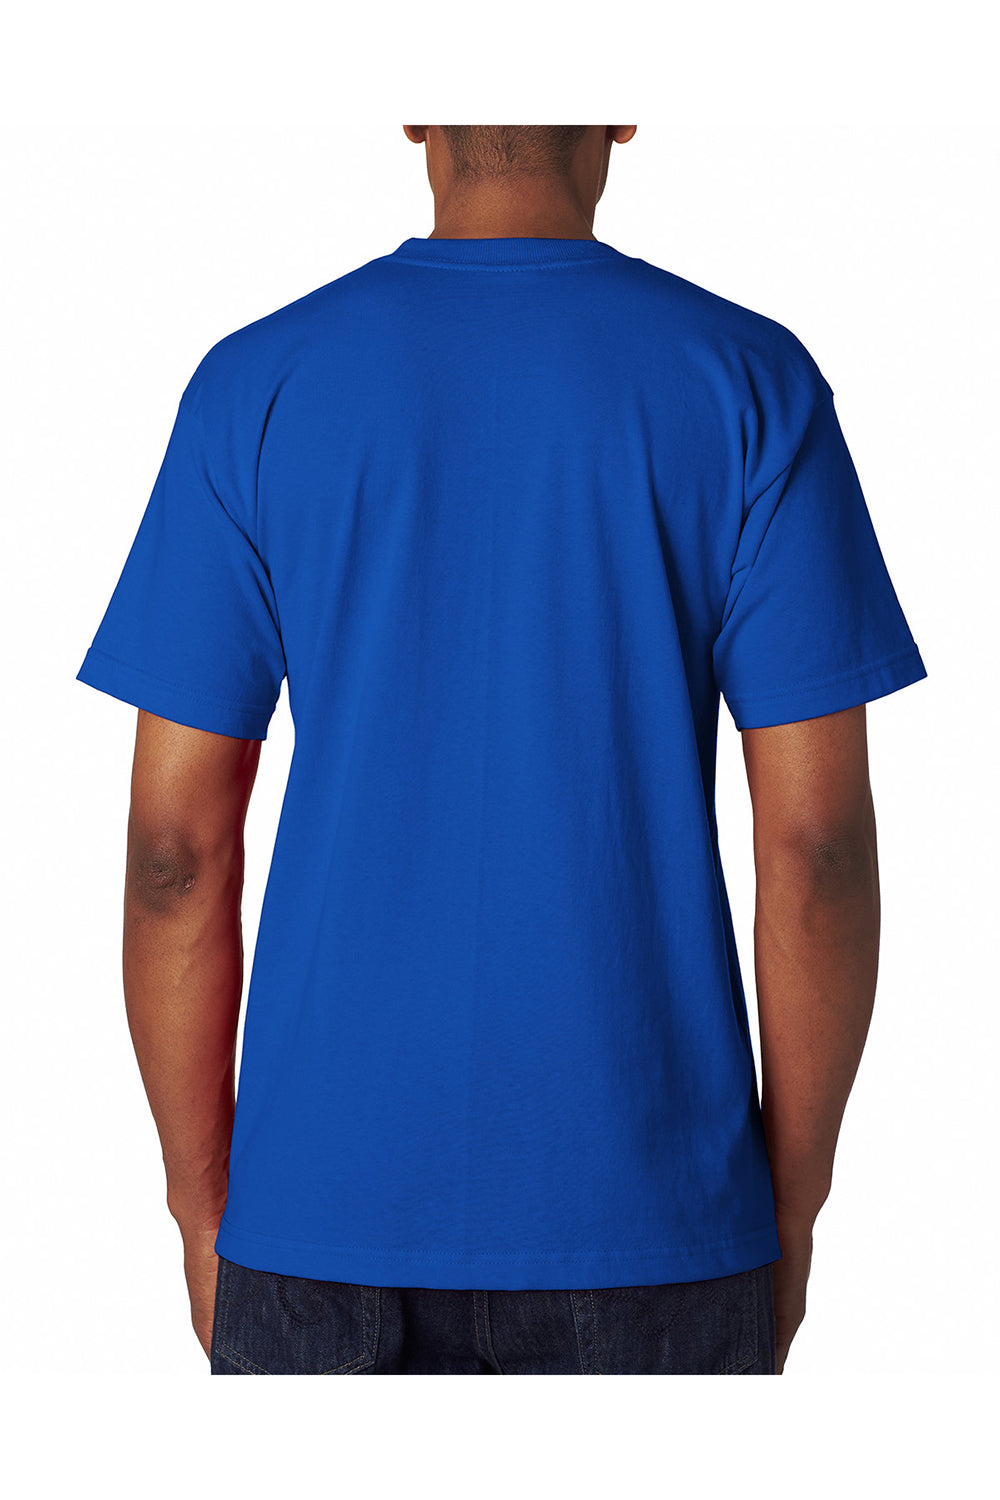 Bayside BA7100 Mens USA Made Short Sleeve Crewneck T-Shirt w/ Pocket Royal Blue Model Back